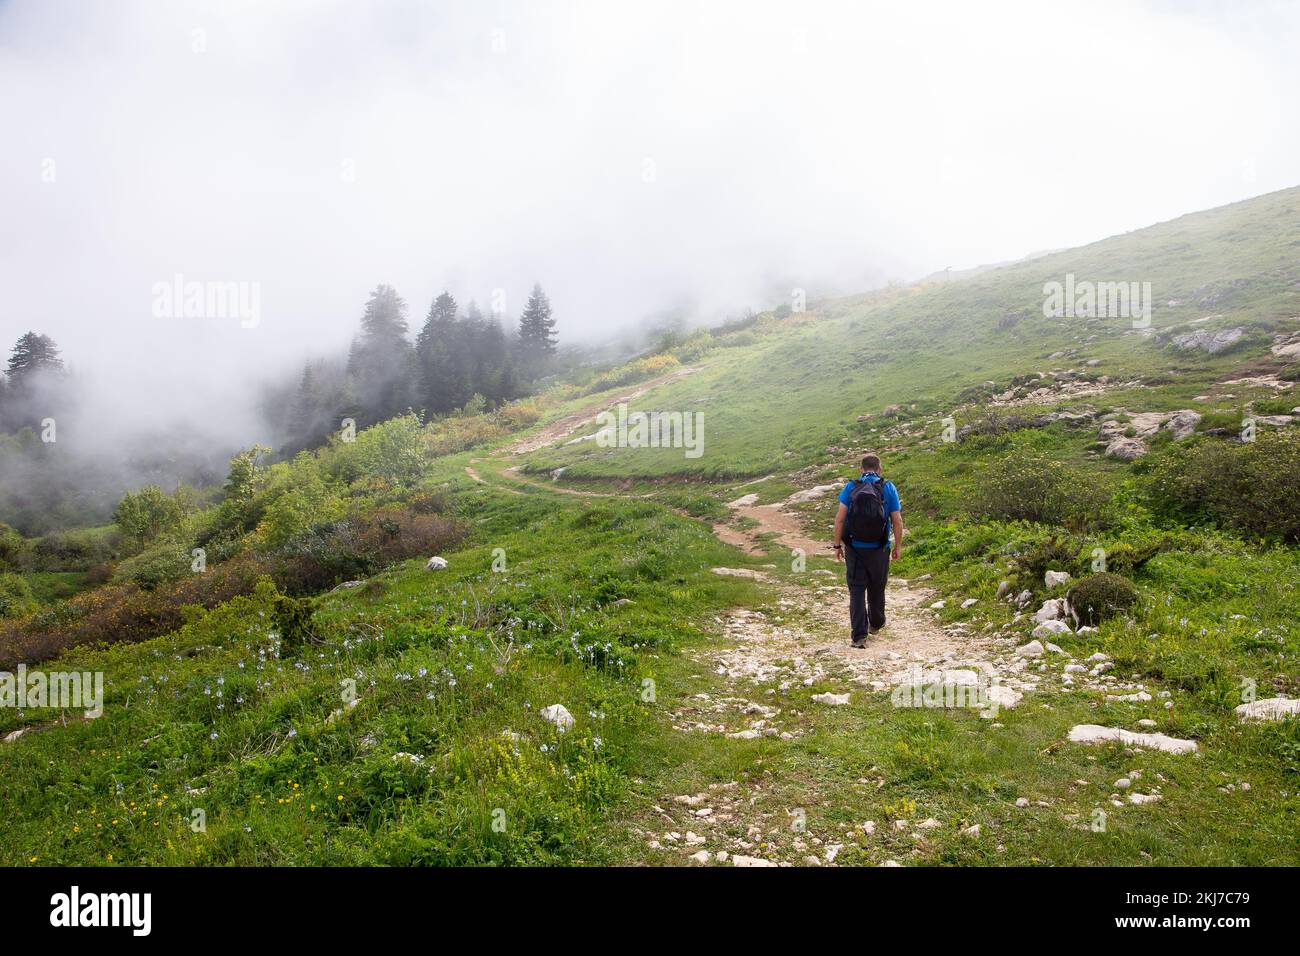 Male tourist hiking through a foggy forest on a trail to Khvamli Mountain peak in Racha region in Georgia. Stock Photo